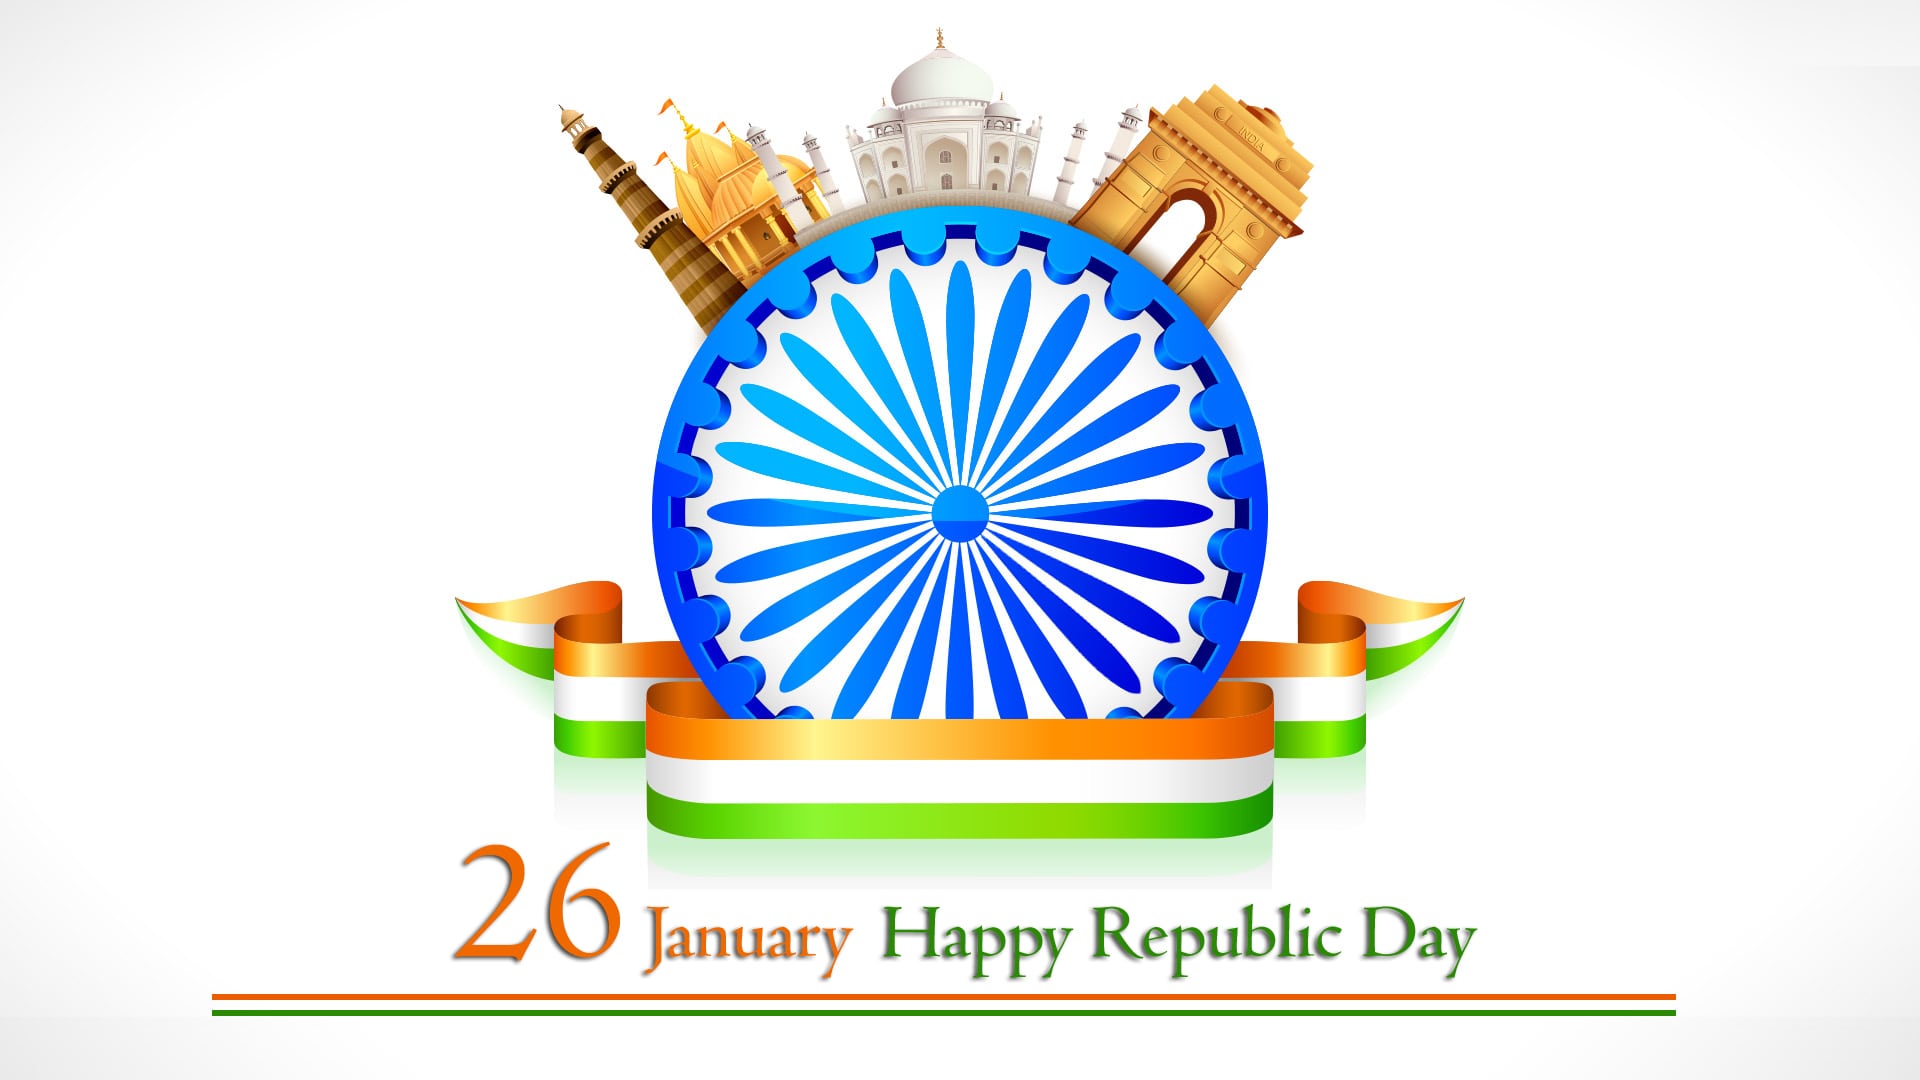 26 january Republic Day image